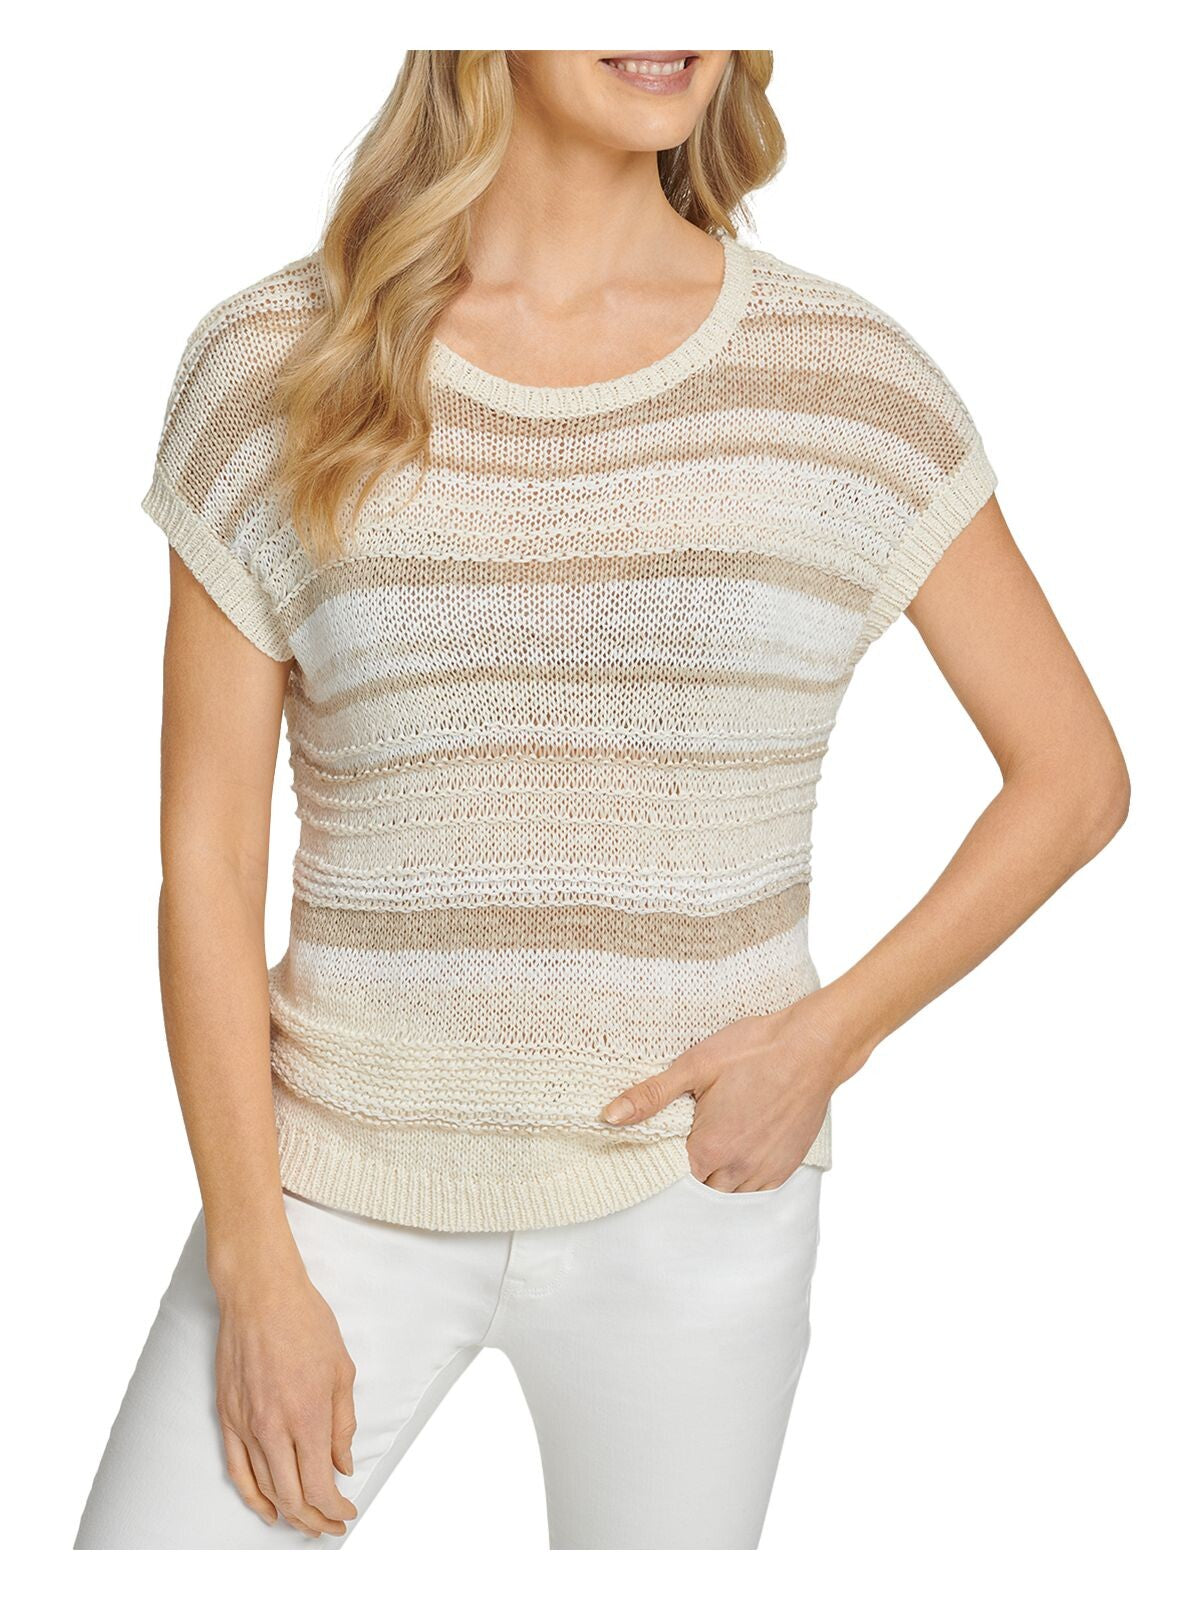 DKNY Womens White Striped Cap Sleeve Jewel Neck Sweater XL